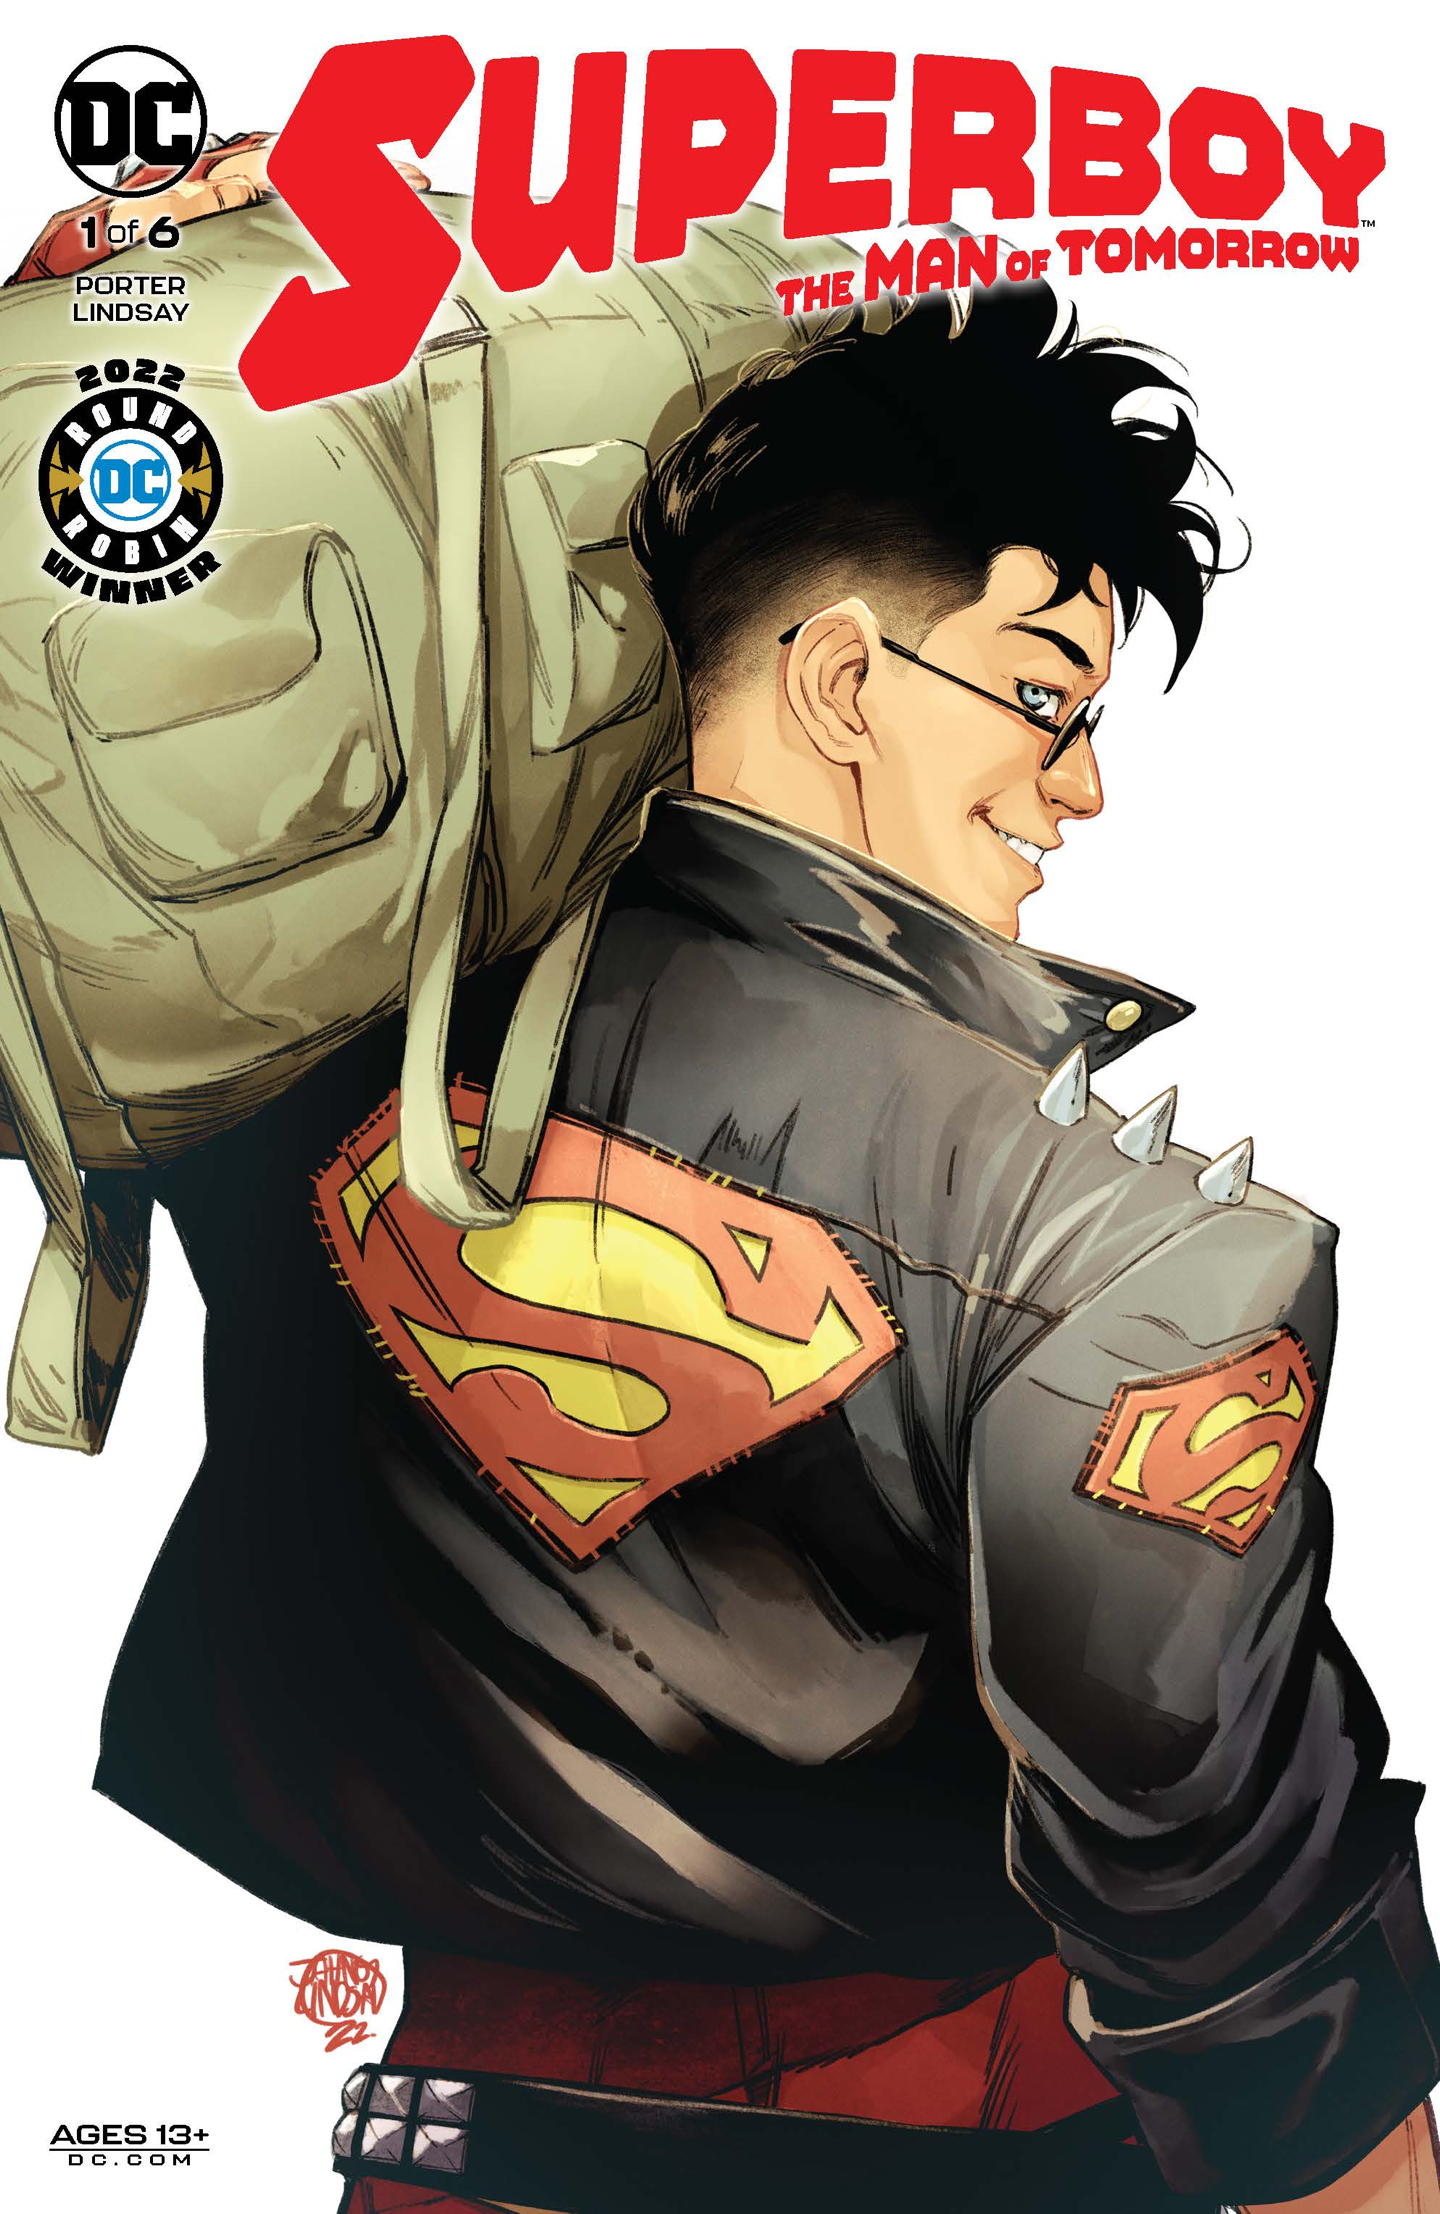 Superboy Man of Tomorrow Cover.jpg